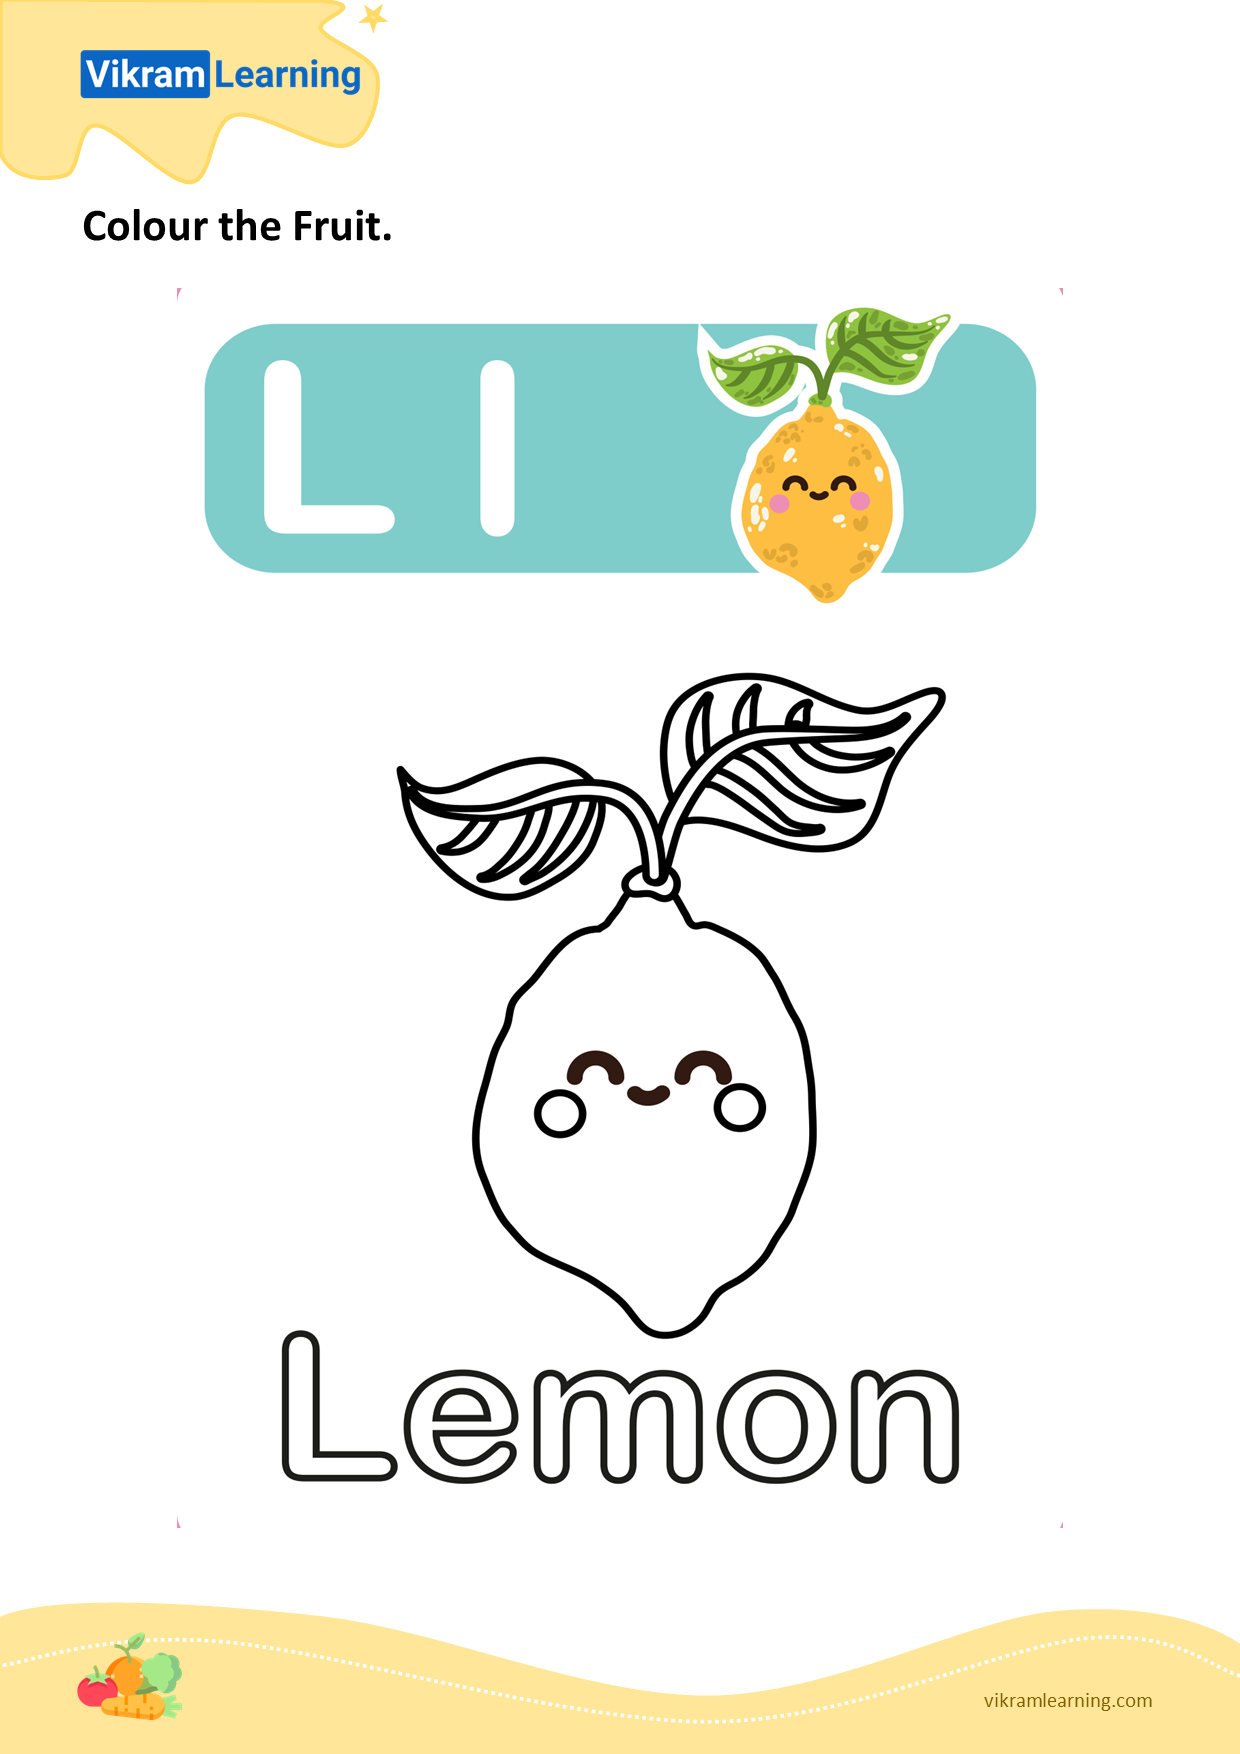 Download colour the fruit - lemon worksheets